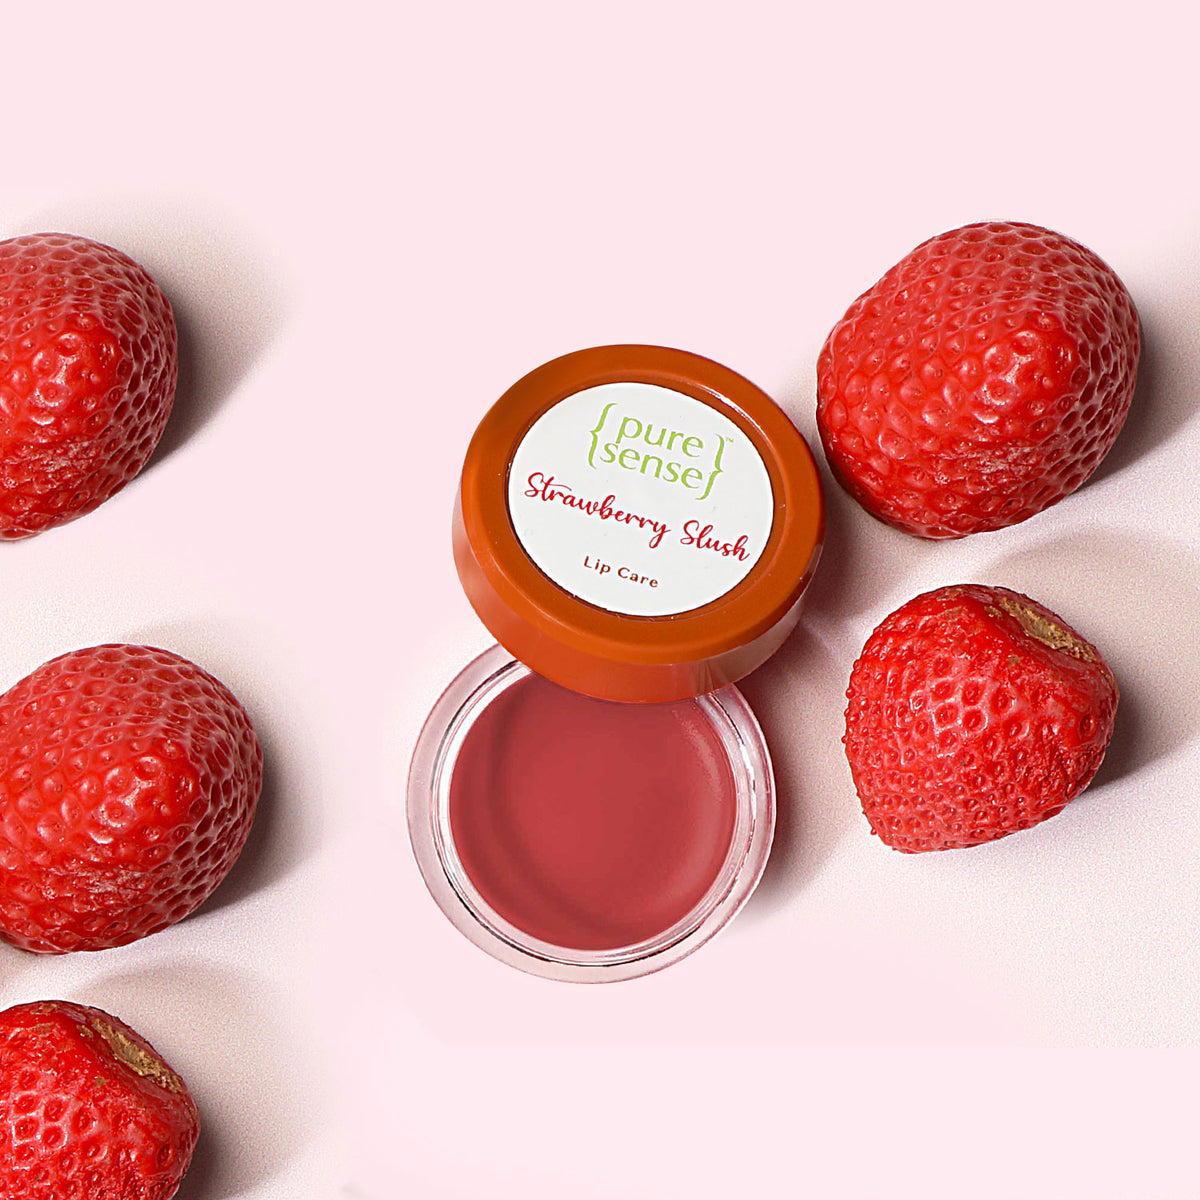 Strawberry Slush Lip Balm | From the makers of Parachute Advansed | 5ml - PureSense